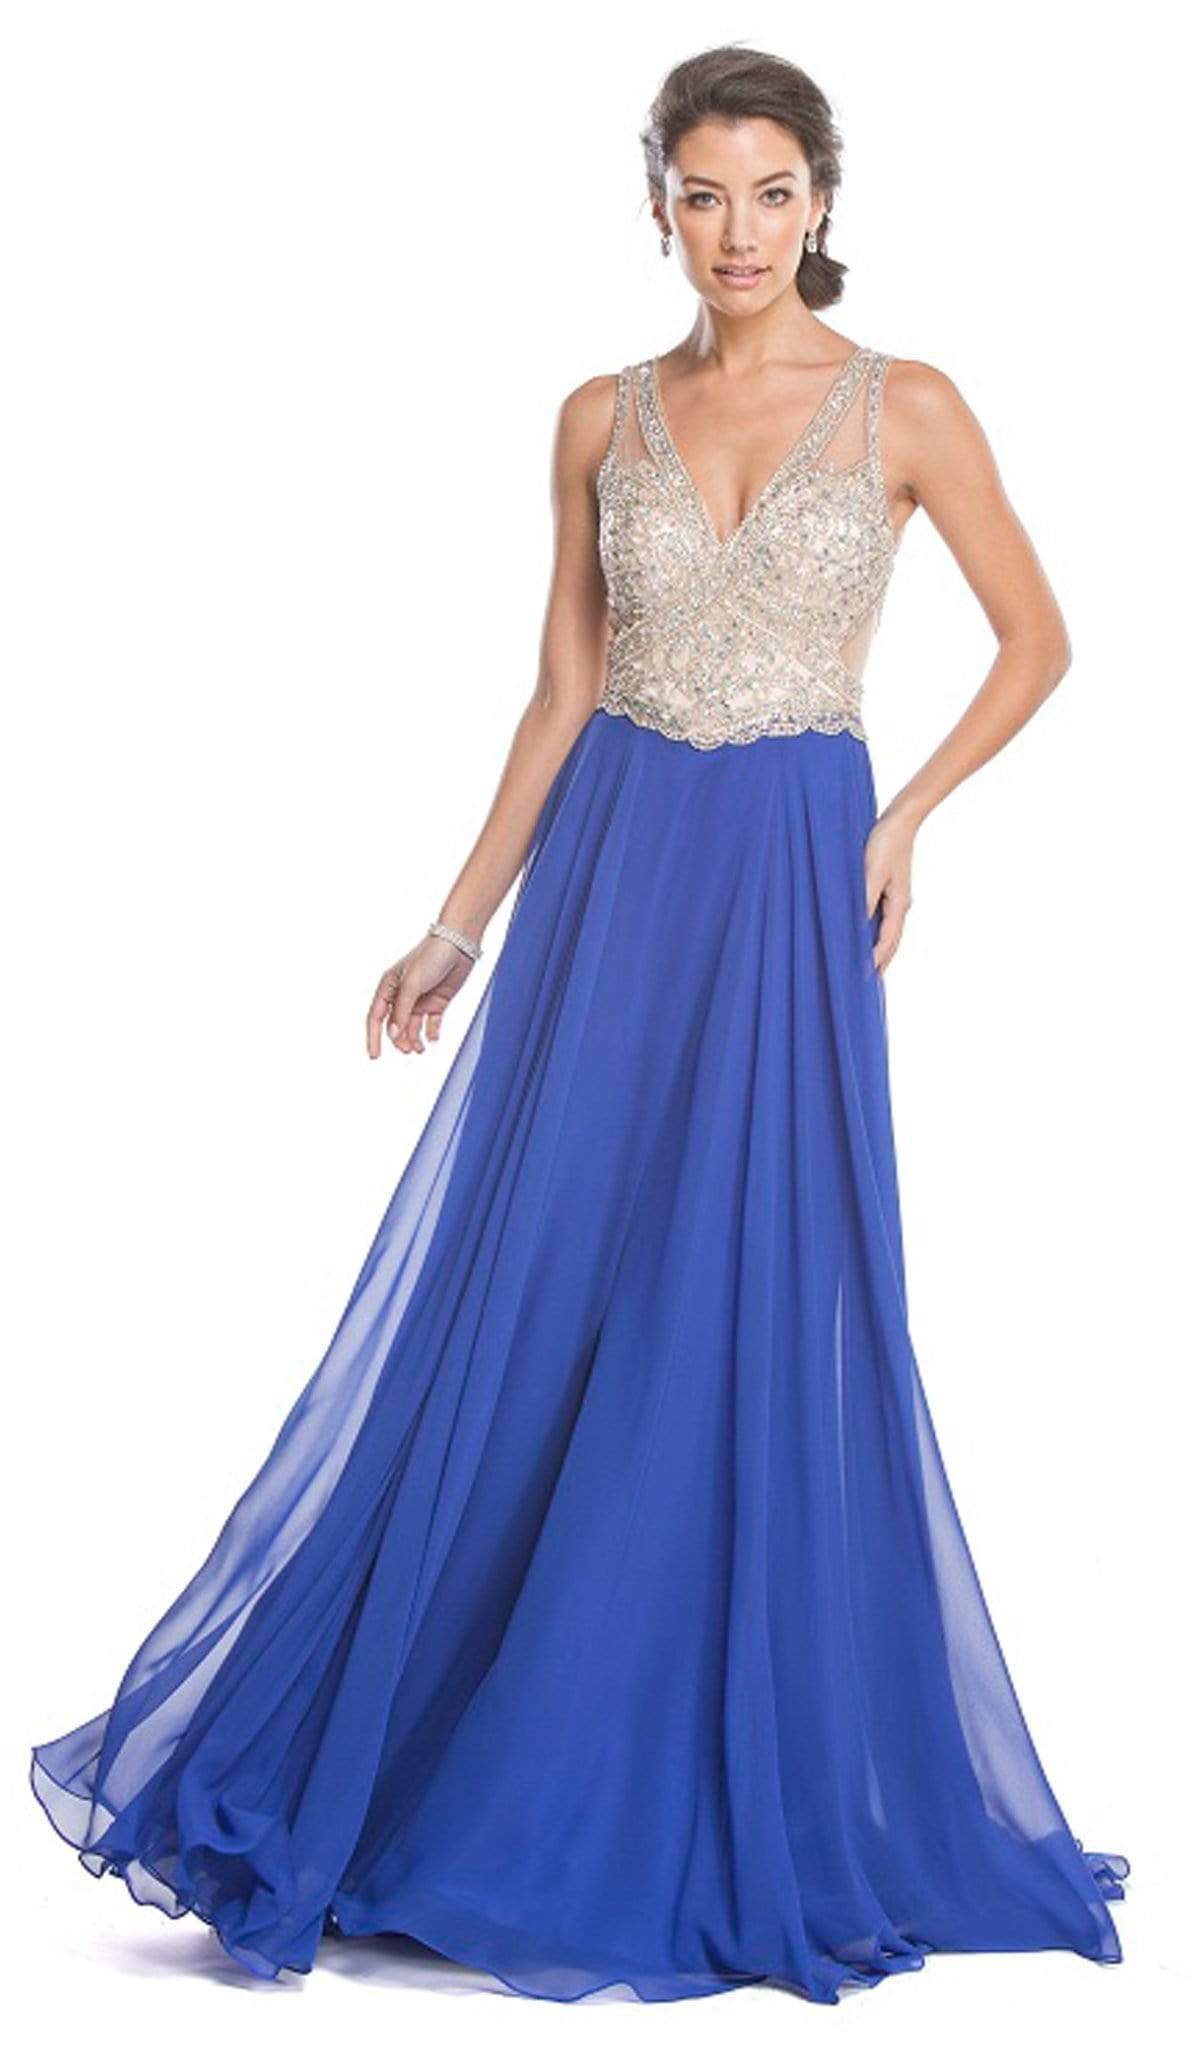 Image of Aspeed Design - Jeweled Plunging V-neck Prom Dress